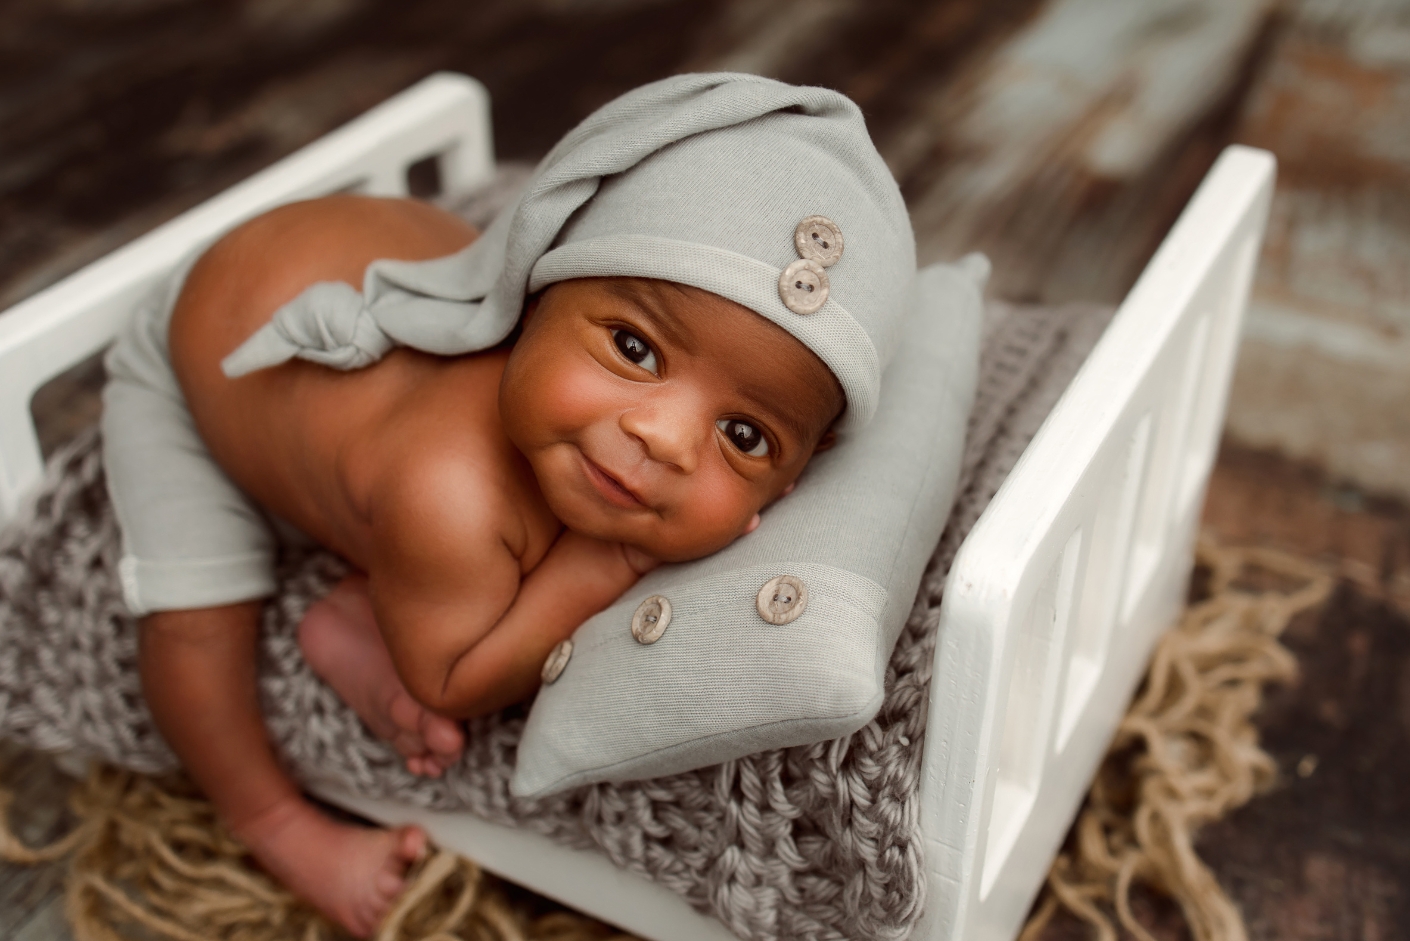 Lil One Photography - Newborn portraits